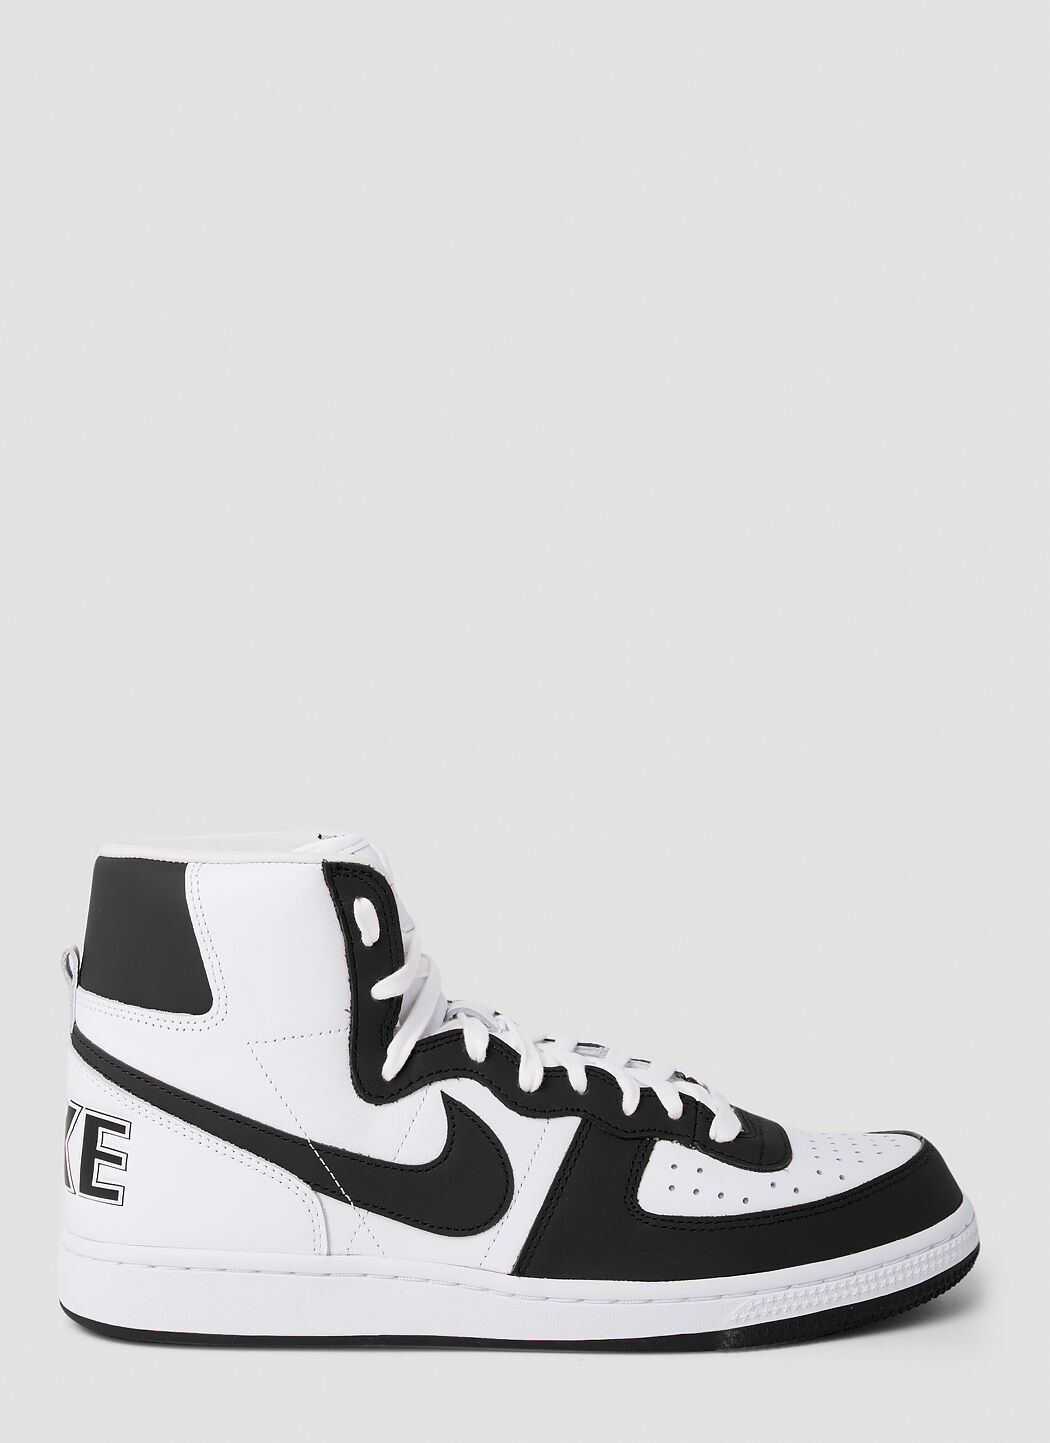 Saint Laurent x Nike Terminator Sneakers Black sla0156040